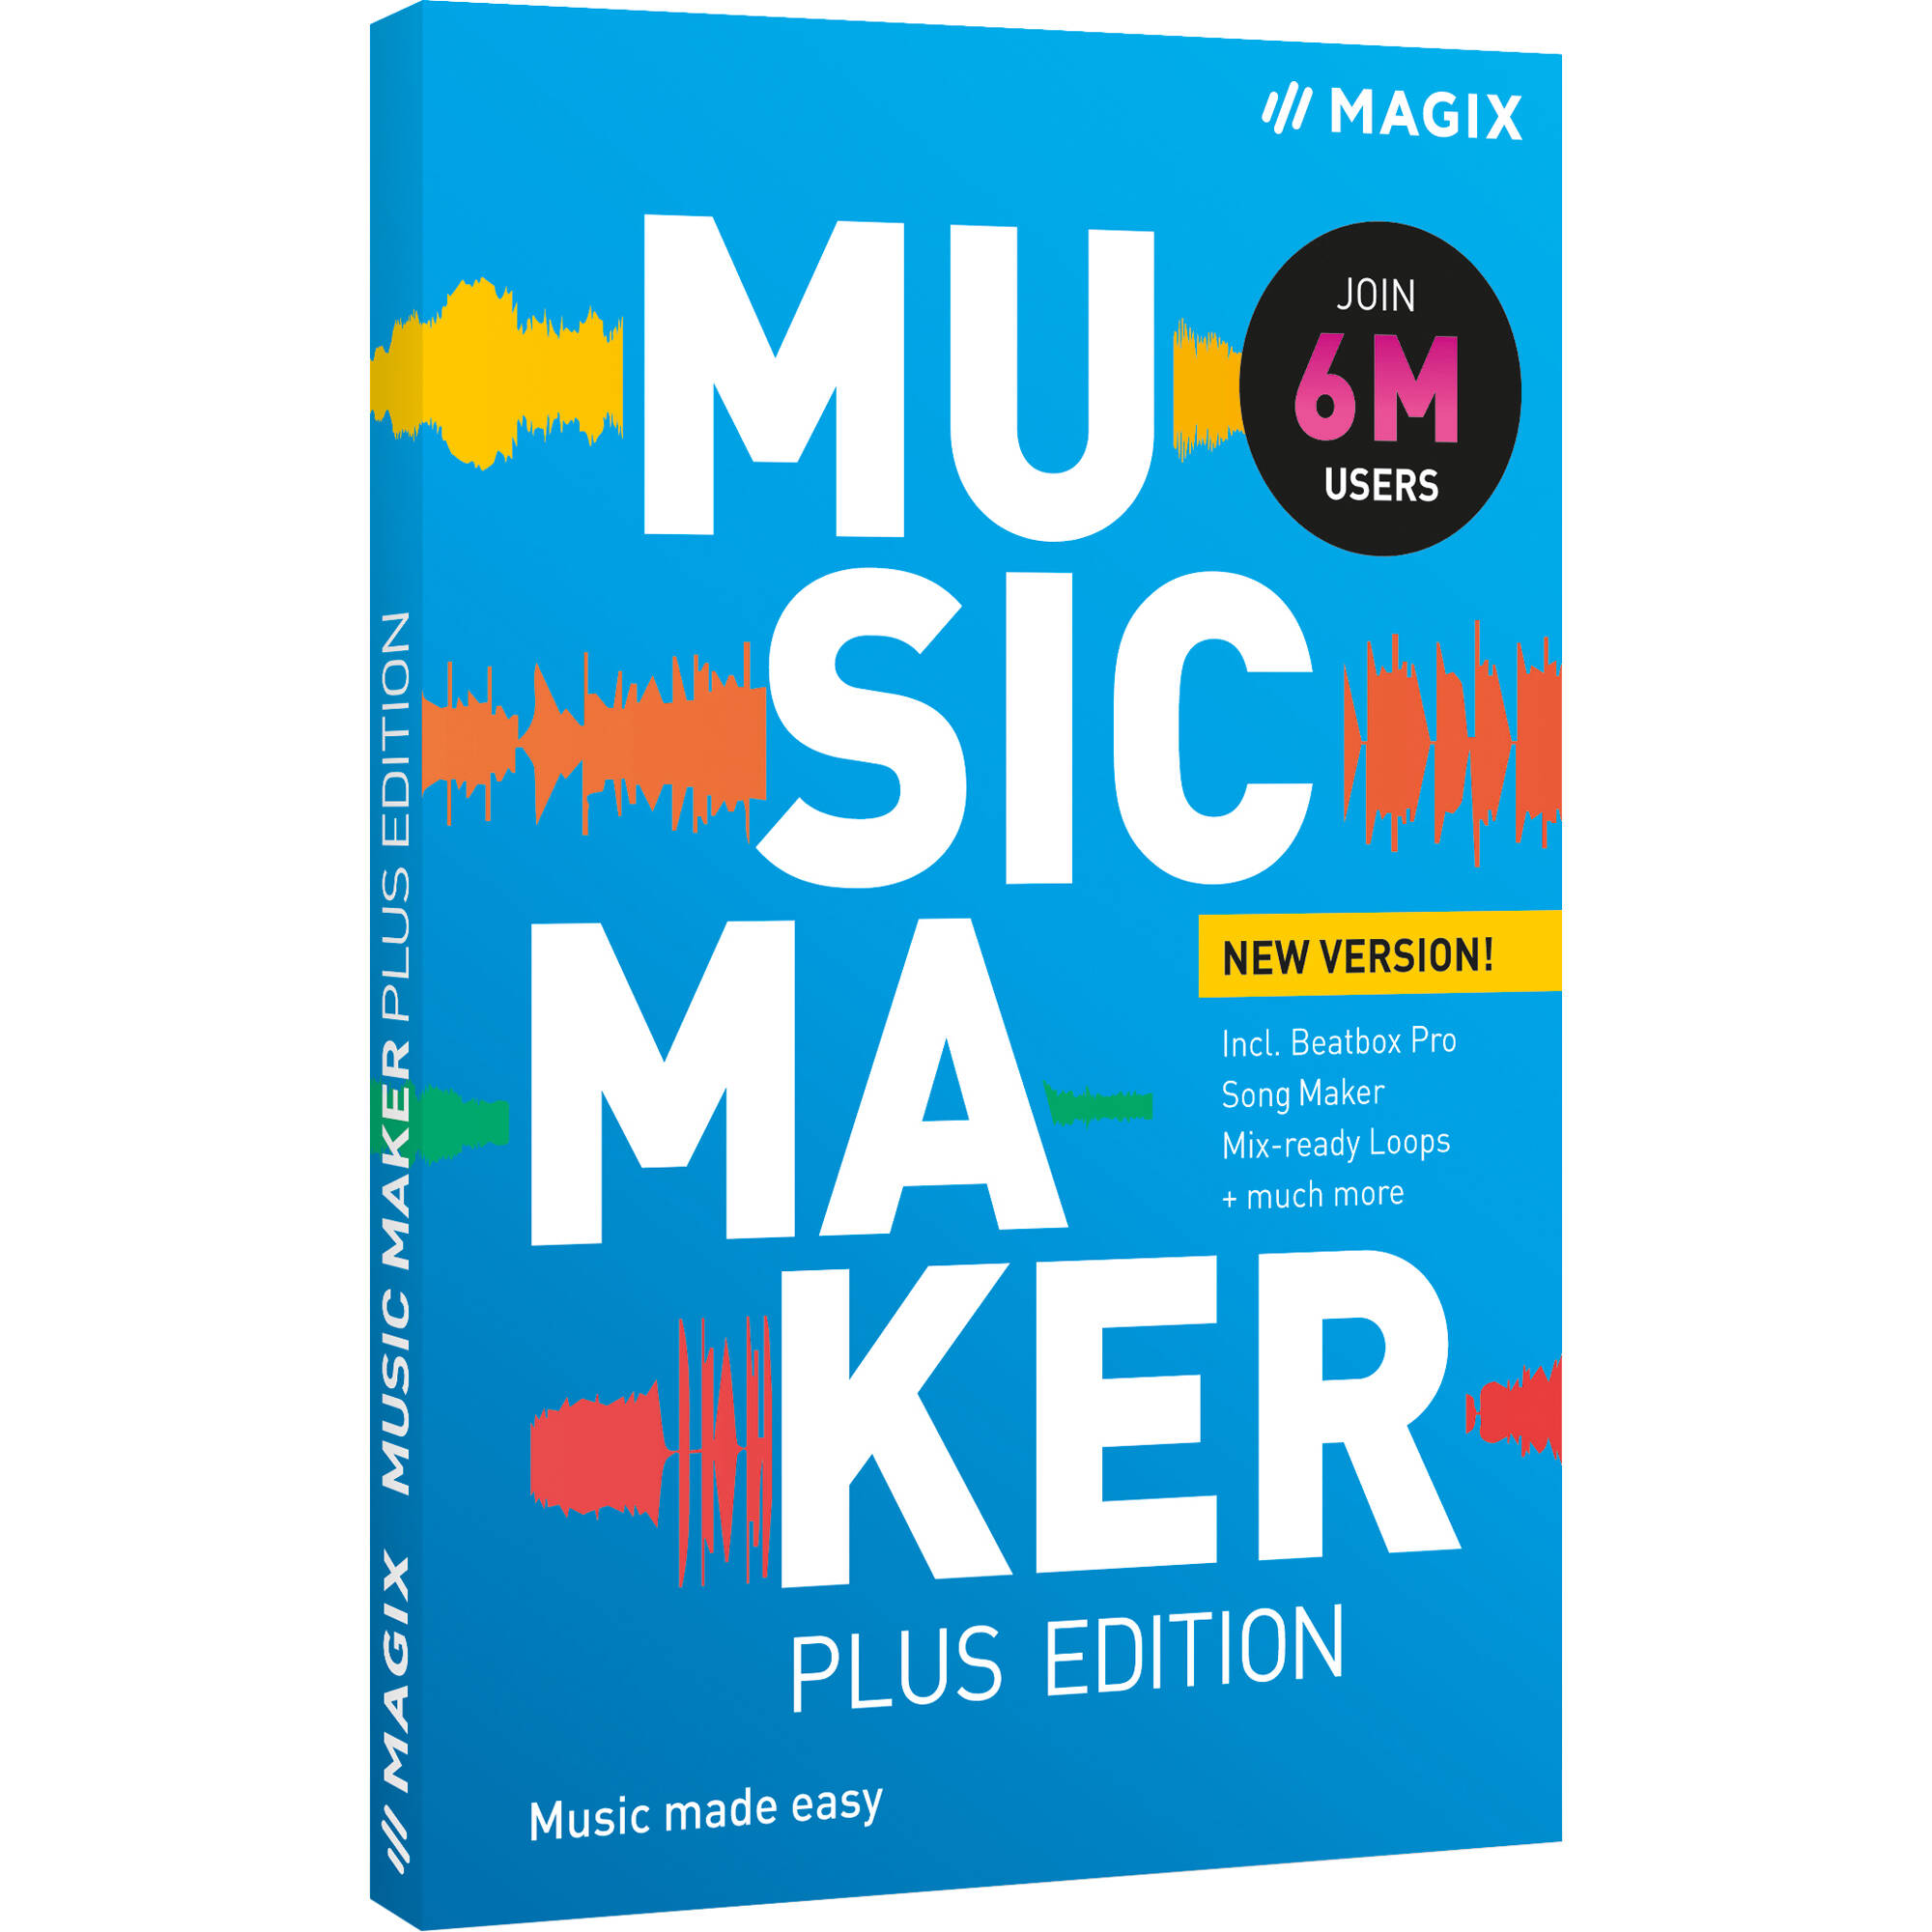 magix music maker 14 free download